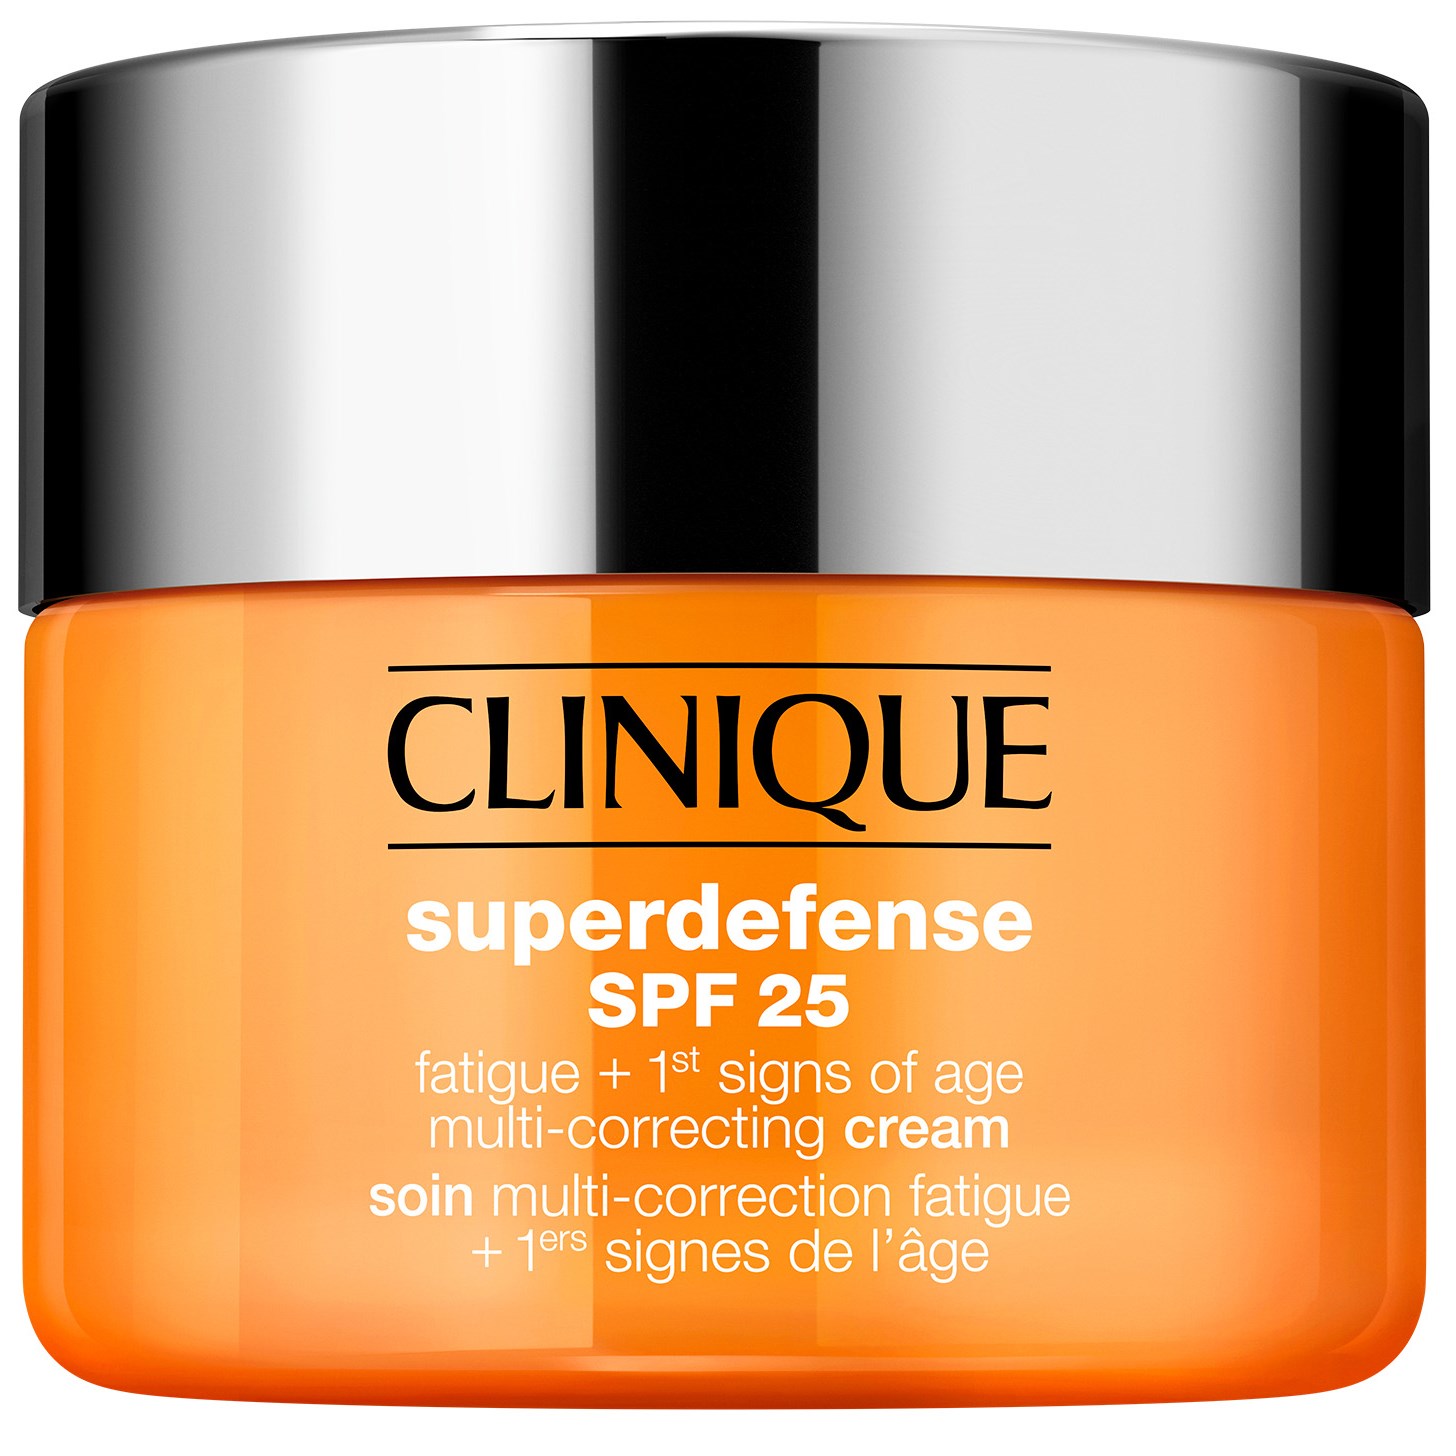 Bilde av Clinique Superdefense Spf 25 Fatigue Multi-correcting Face Cream, Very